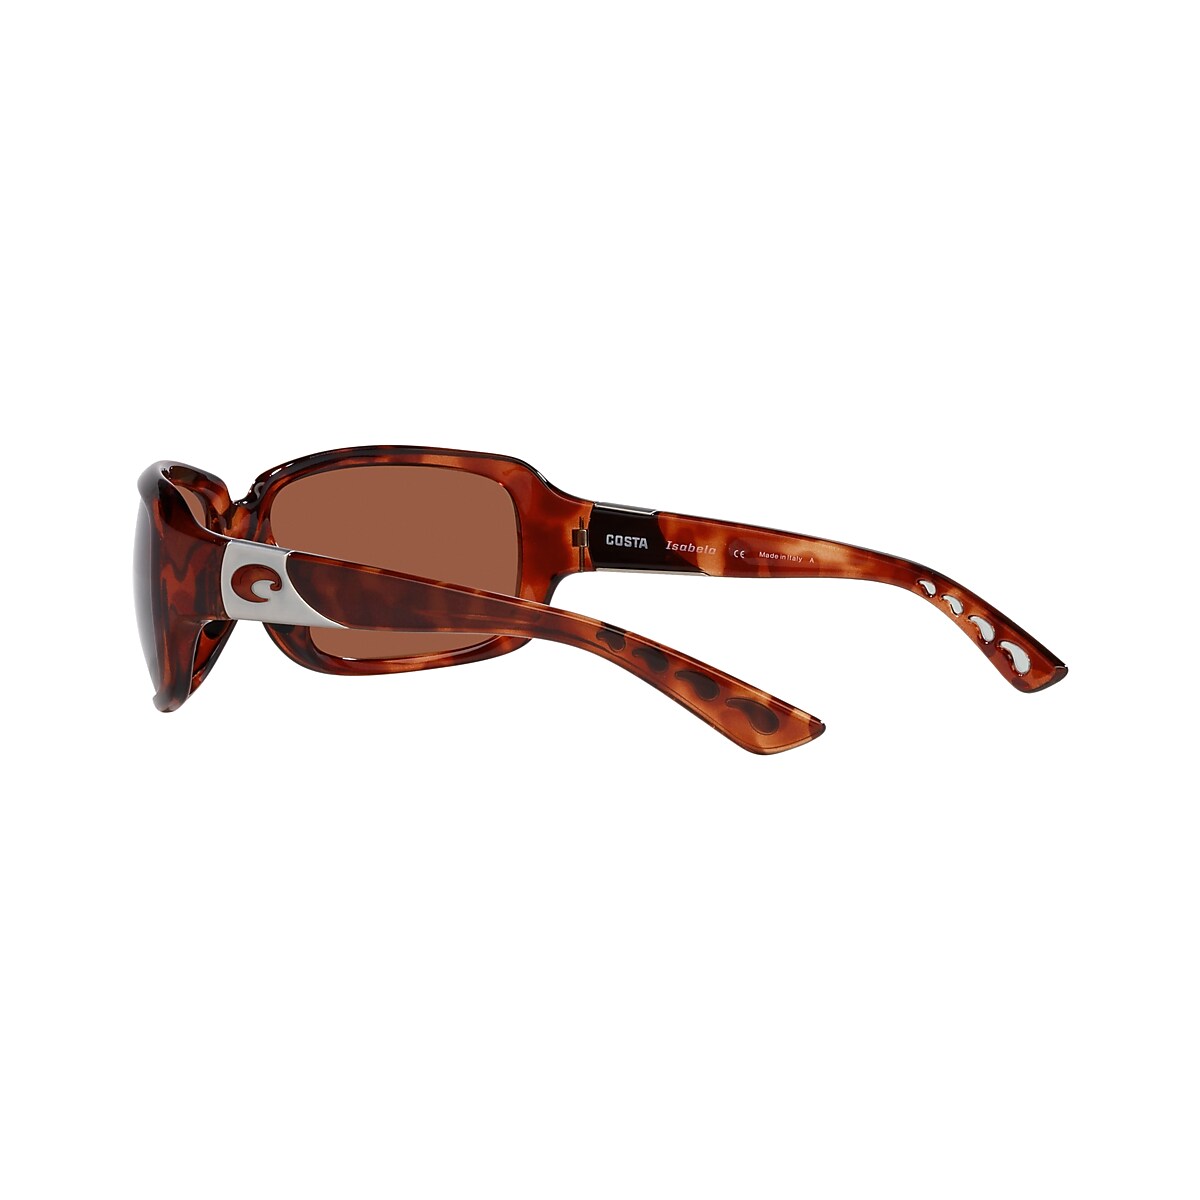 Isabela Polarized Sunglasses in Copper